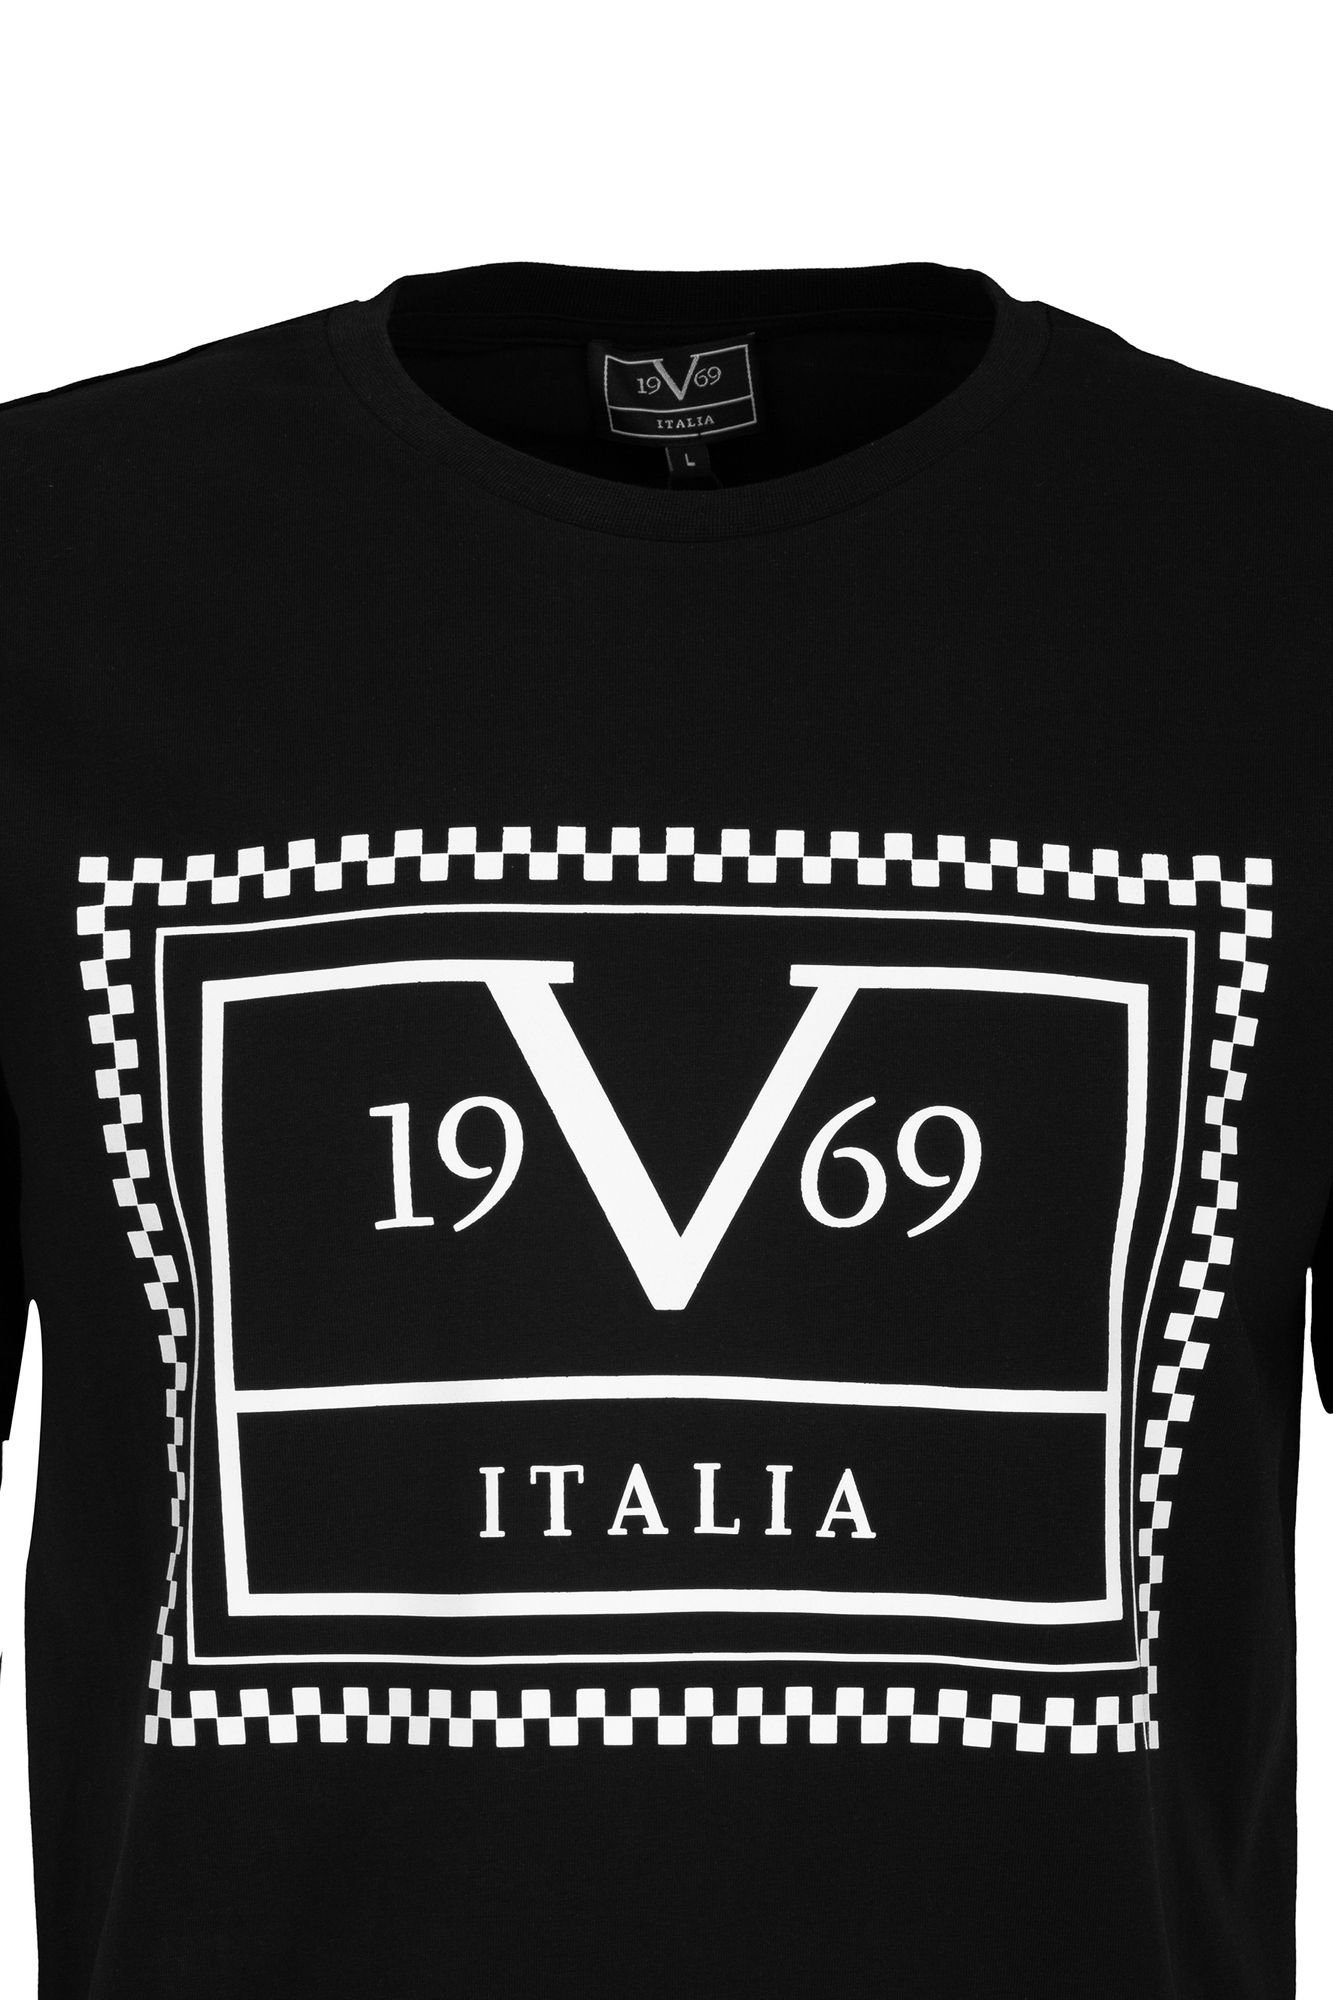 T-Shirt Versace Giovanni Italia by 19V69